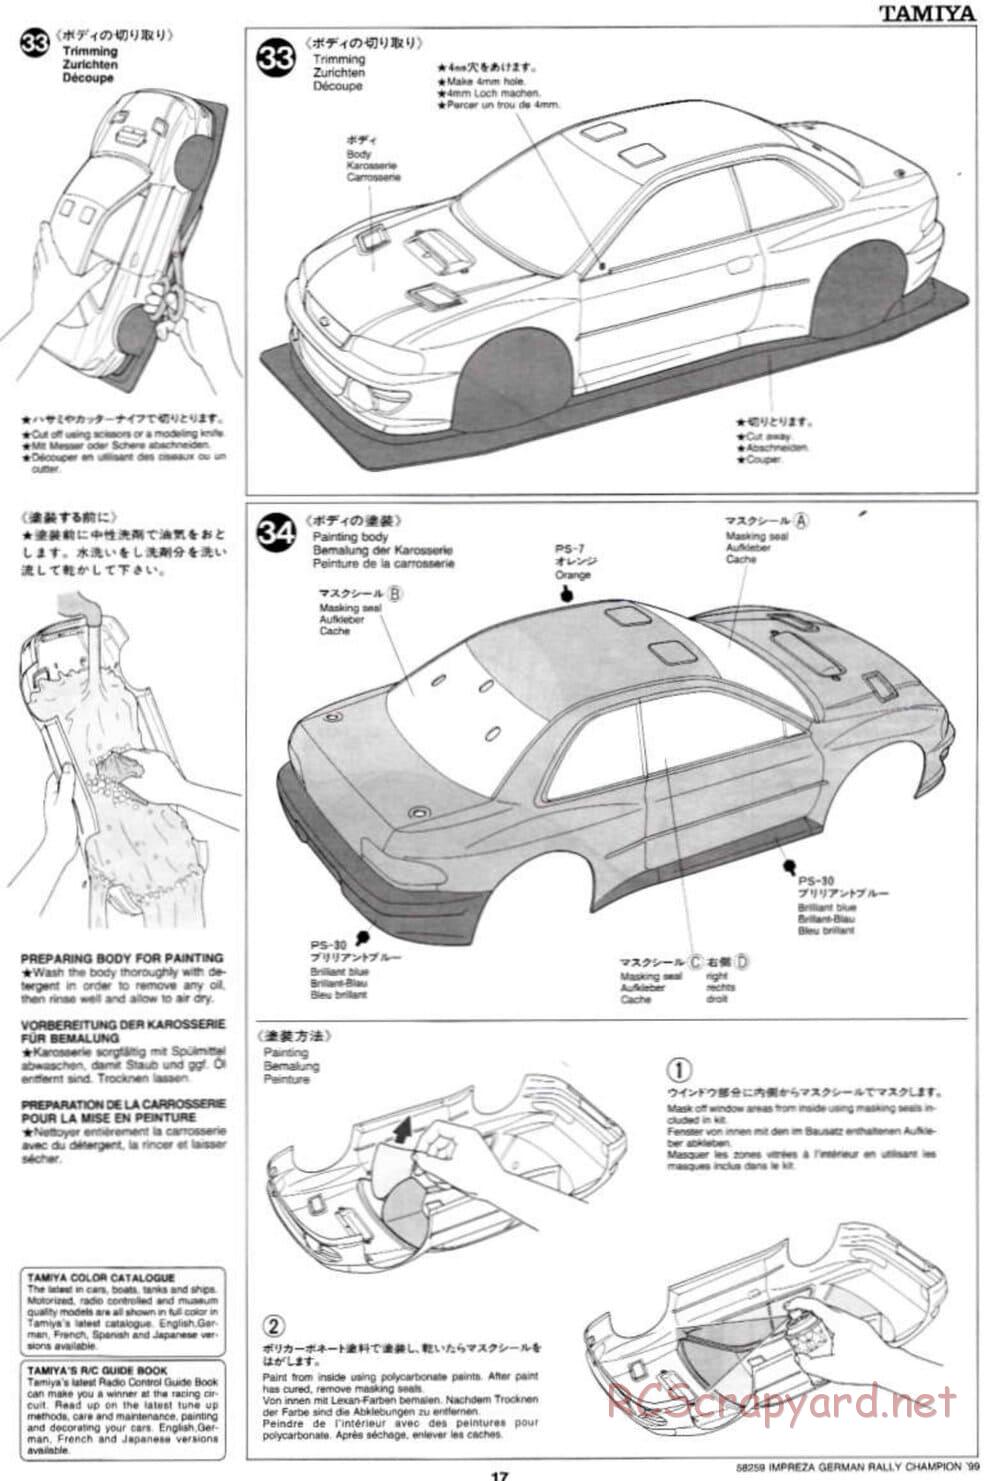 Tamiya - Subaru Impreza German Rally Champion 99 - TB-01 Chassis - Manual - Page 17